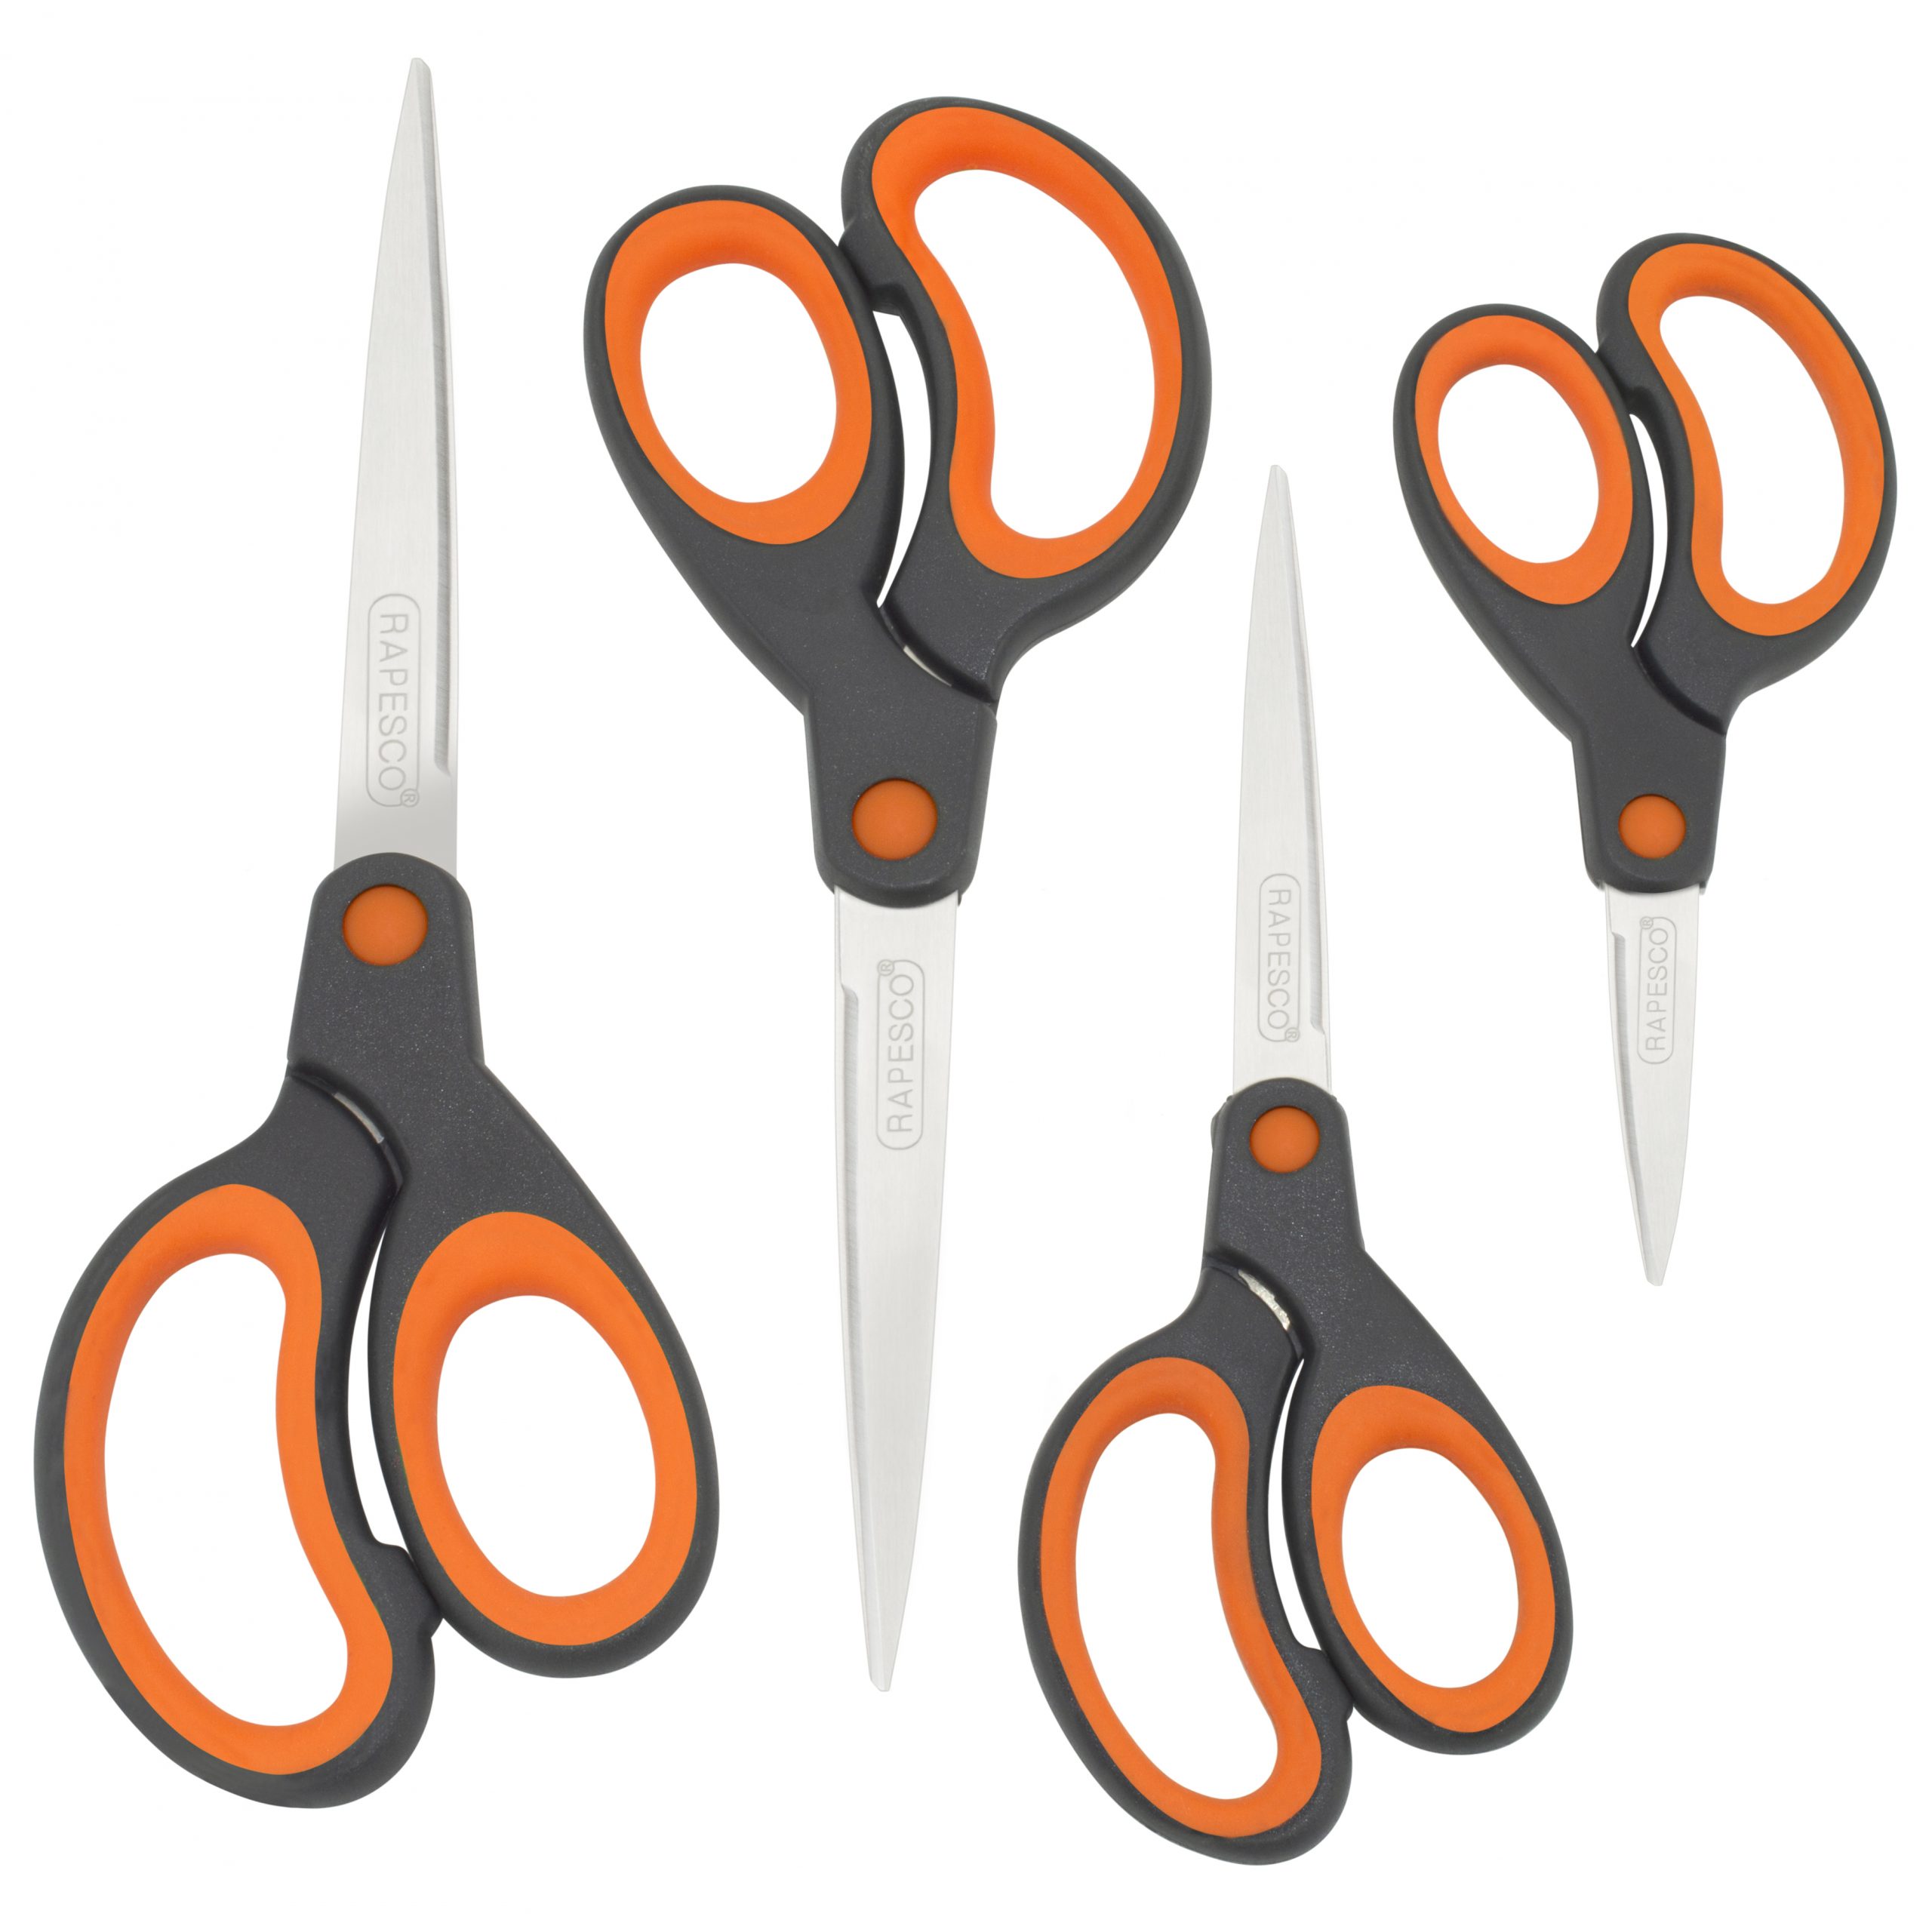 Soft Grip Handle Scissors - Black/Orange - Set of 4 - Rapesco